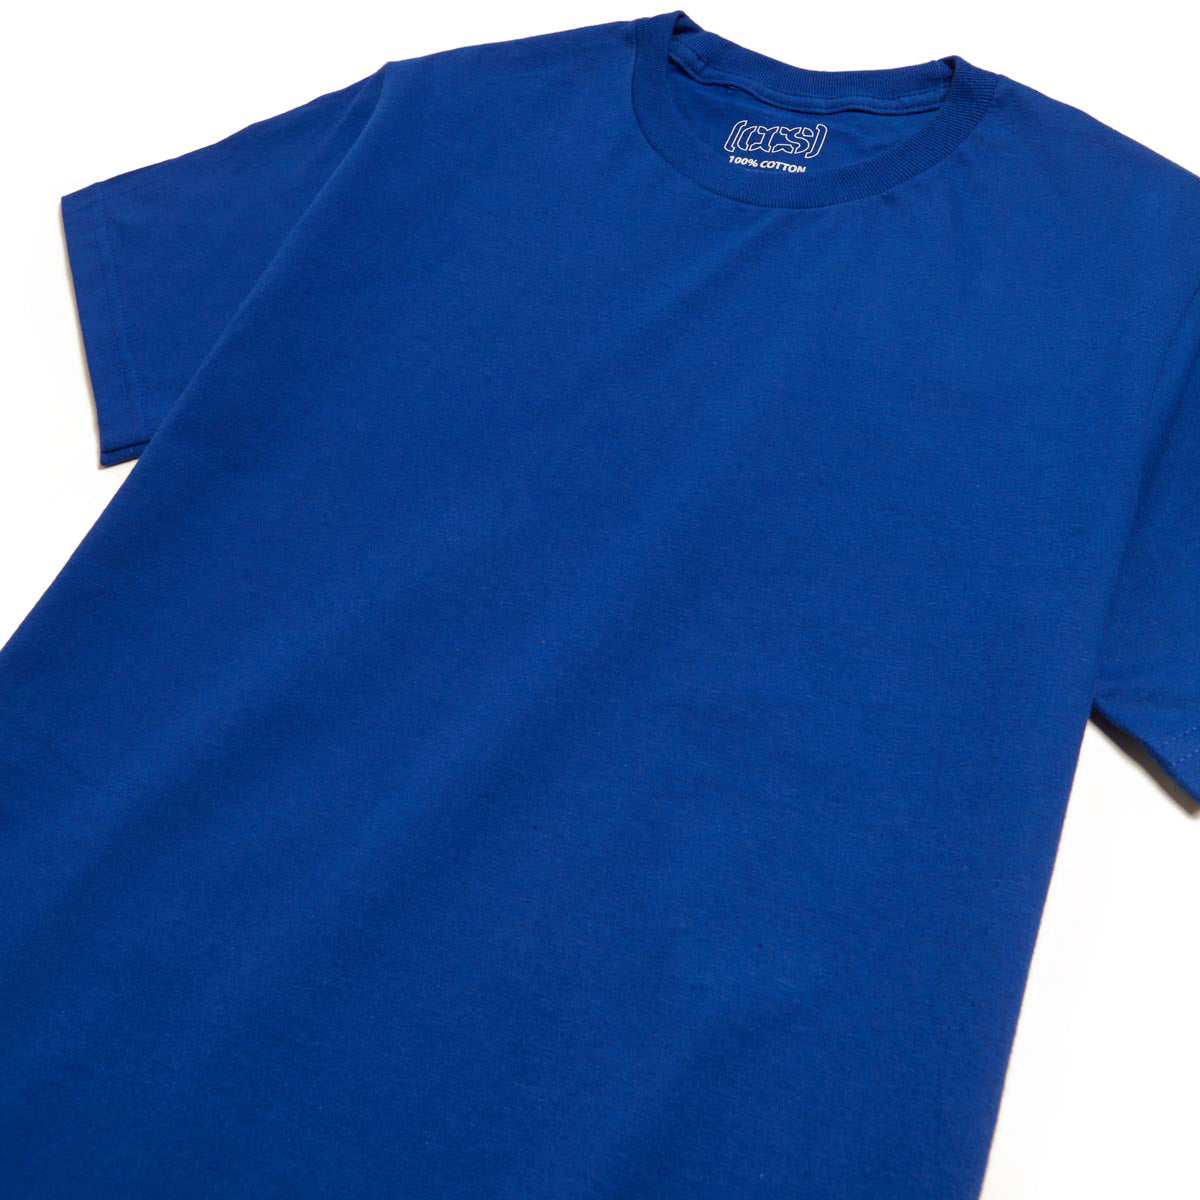 CCS Original Heavyweight T-Shirt - Royal Blue image 2